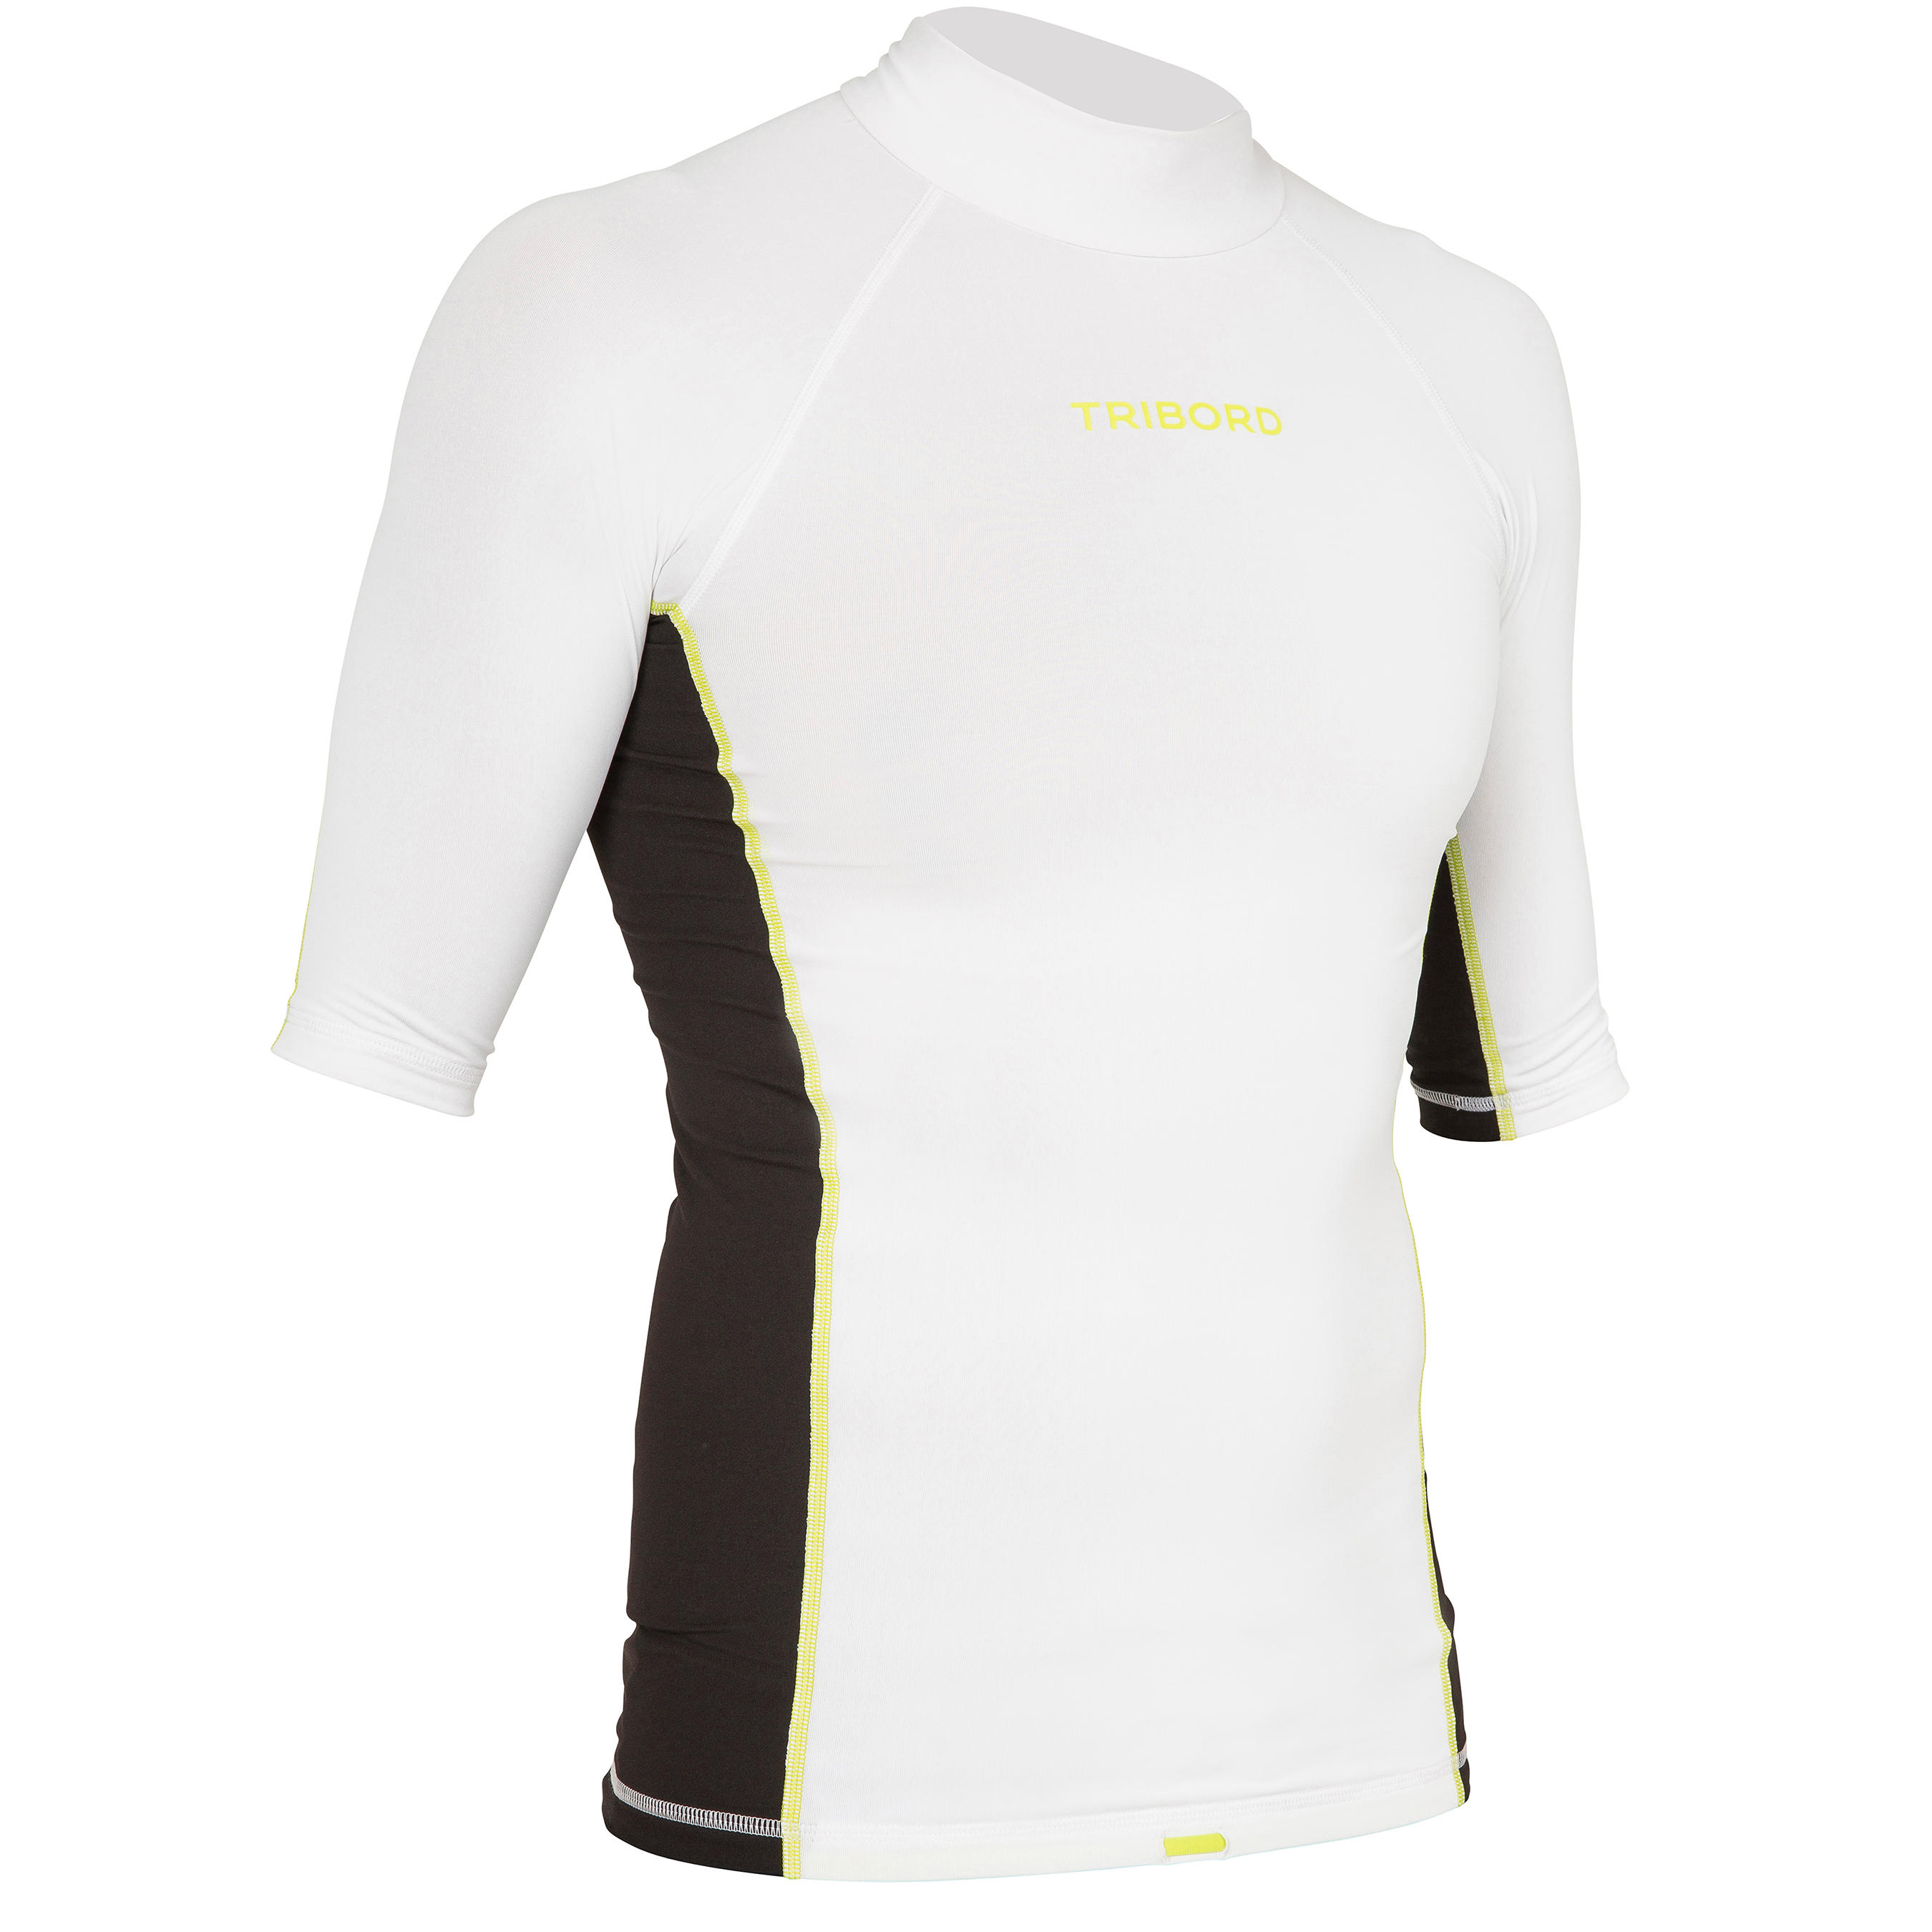 TRIBORD 500 Men's Short Sleeve UV Protection Surfing Top T-Shirt - White Black